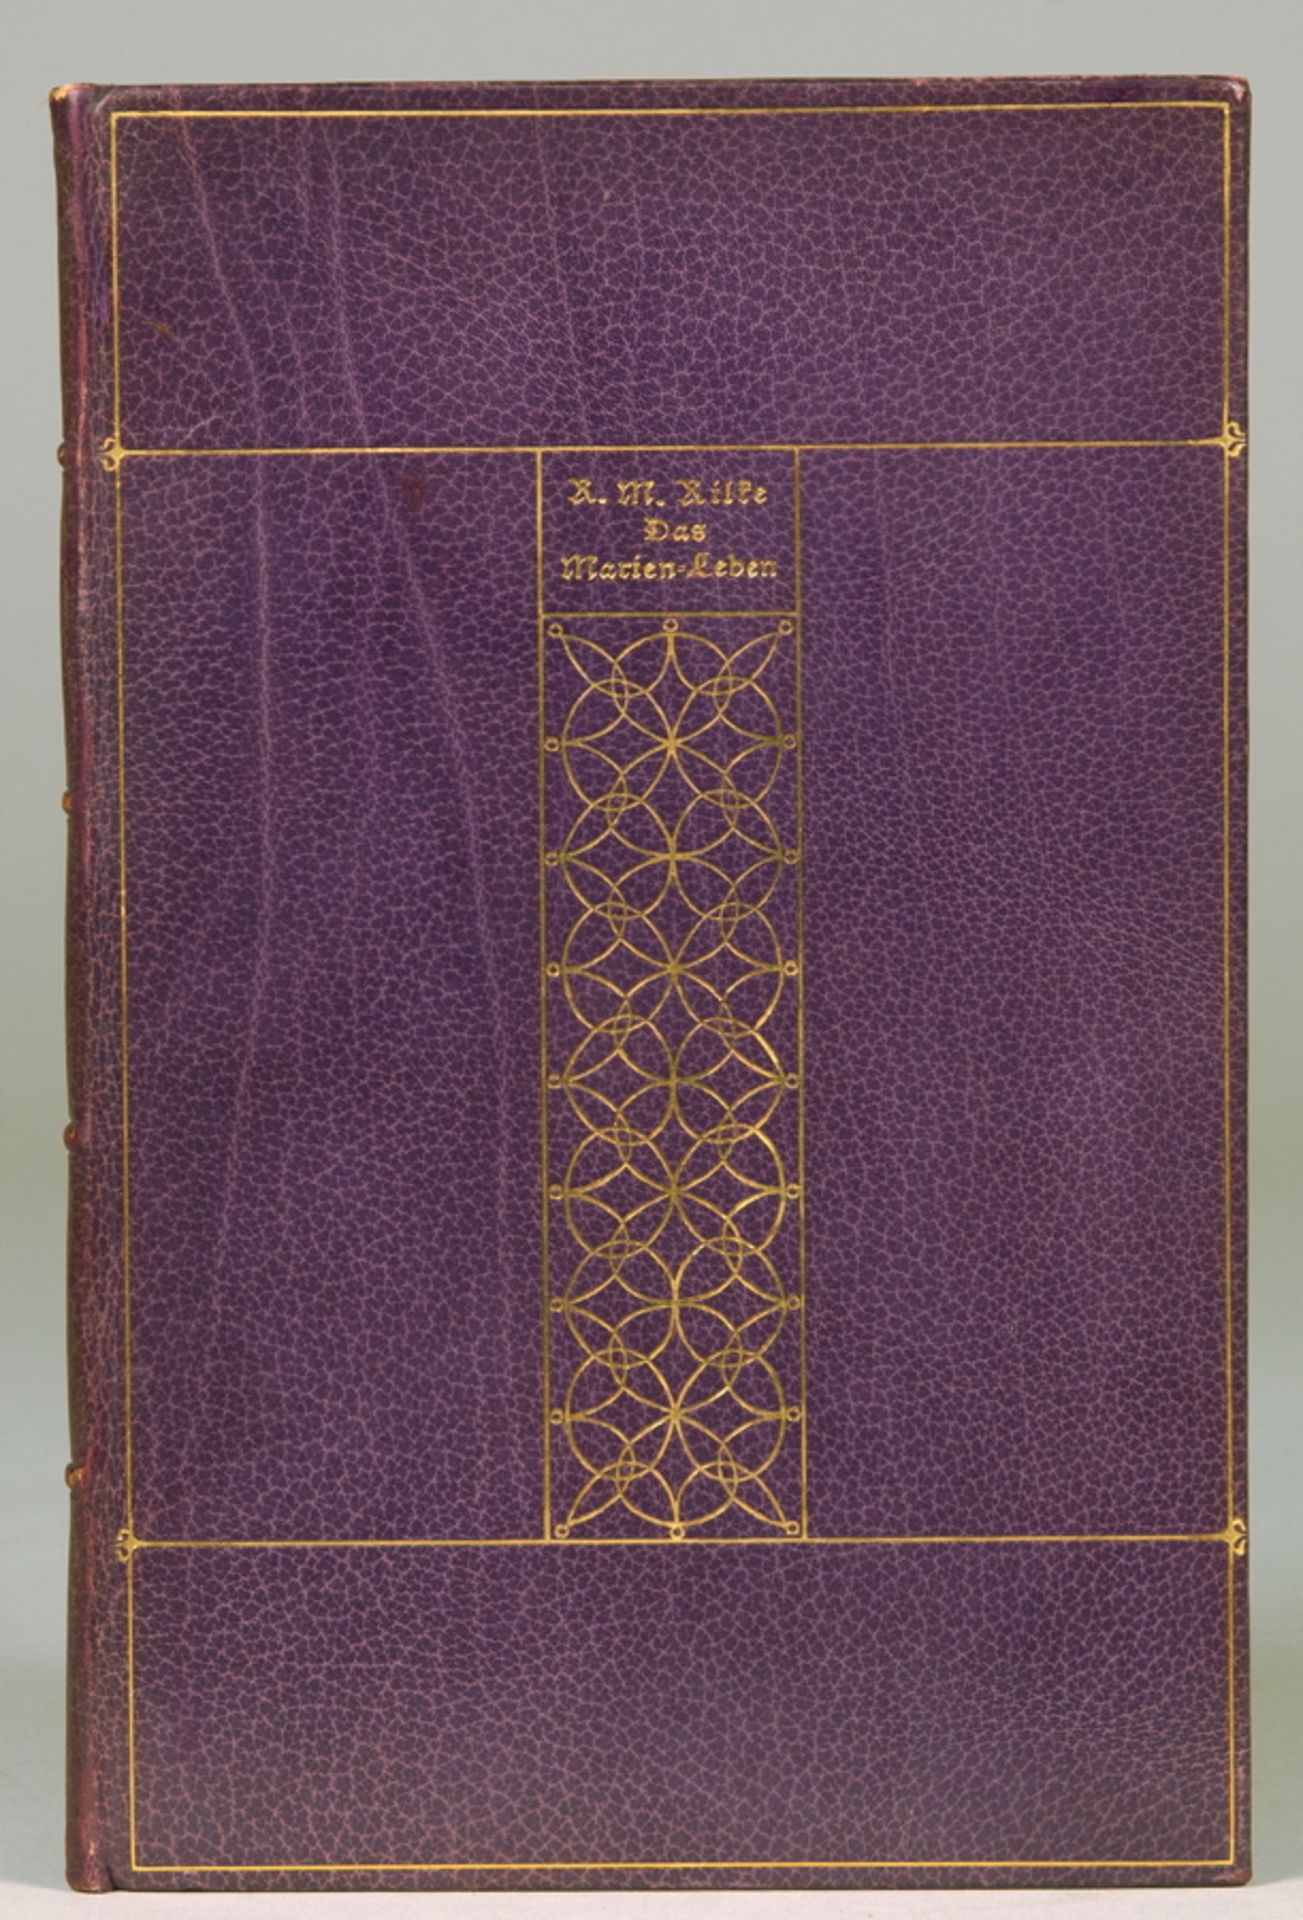 "Insel-Bücherei - Rainer Maria Rilke. Das Marien-Leben. Leipzig, Insel [1913]. Violetter